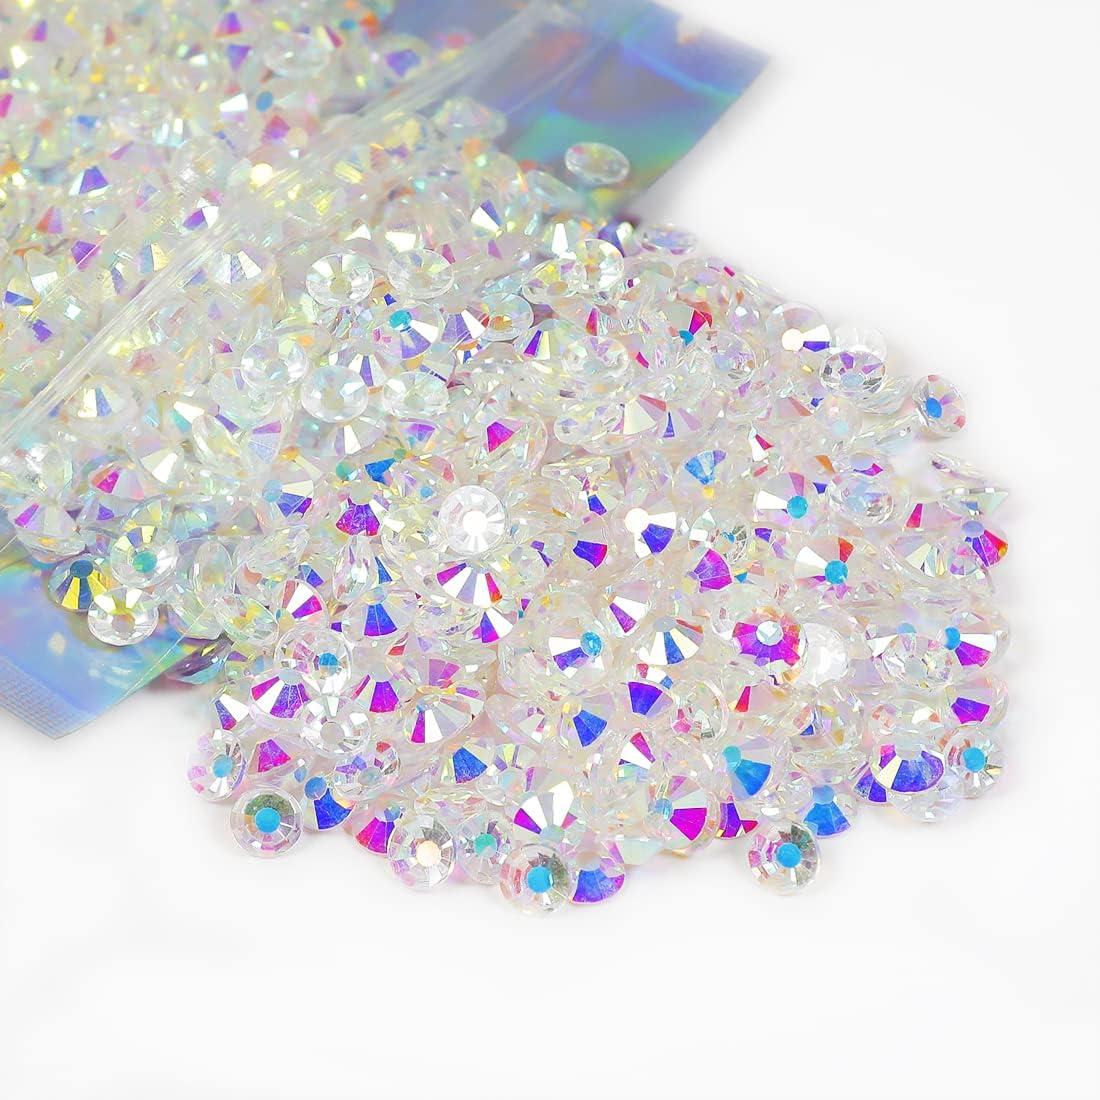 Genie Crystal SS20 Rainbow AB Rhinestones,2016 Pcs 5 mm Multi AB Color Rhinestone,Glue on Glass Gems Stones for Crafts,Shoes,Dress,Clothing,Makeup